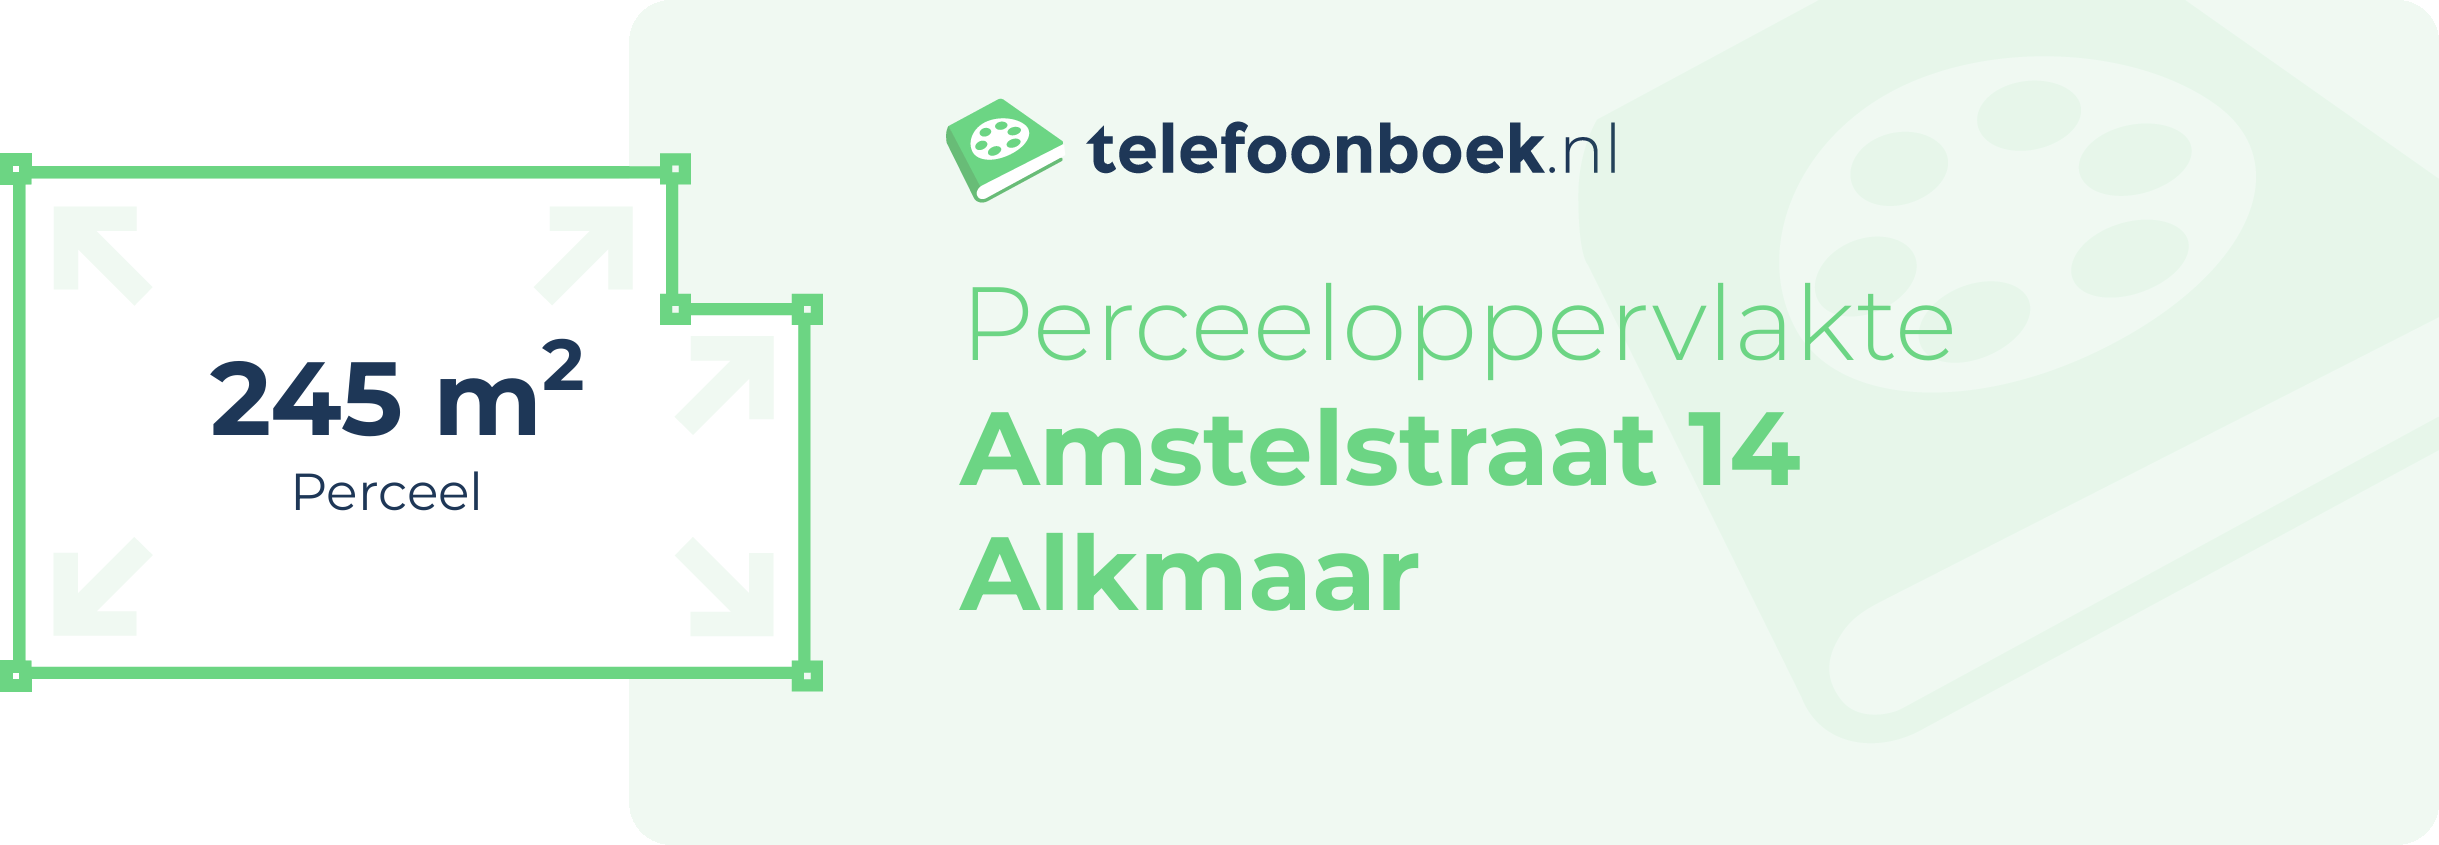 Perceeloppervlakte Amstelstraat 14 Alkmaar